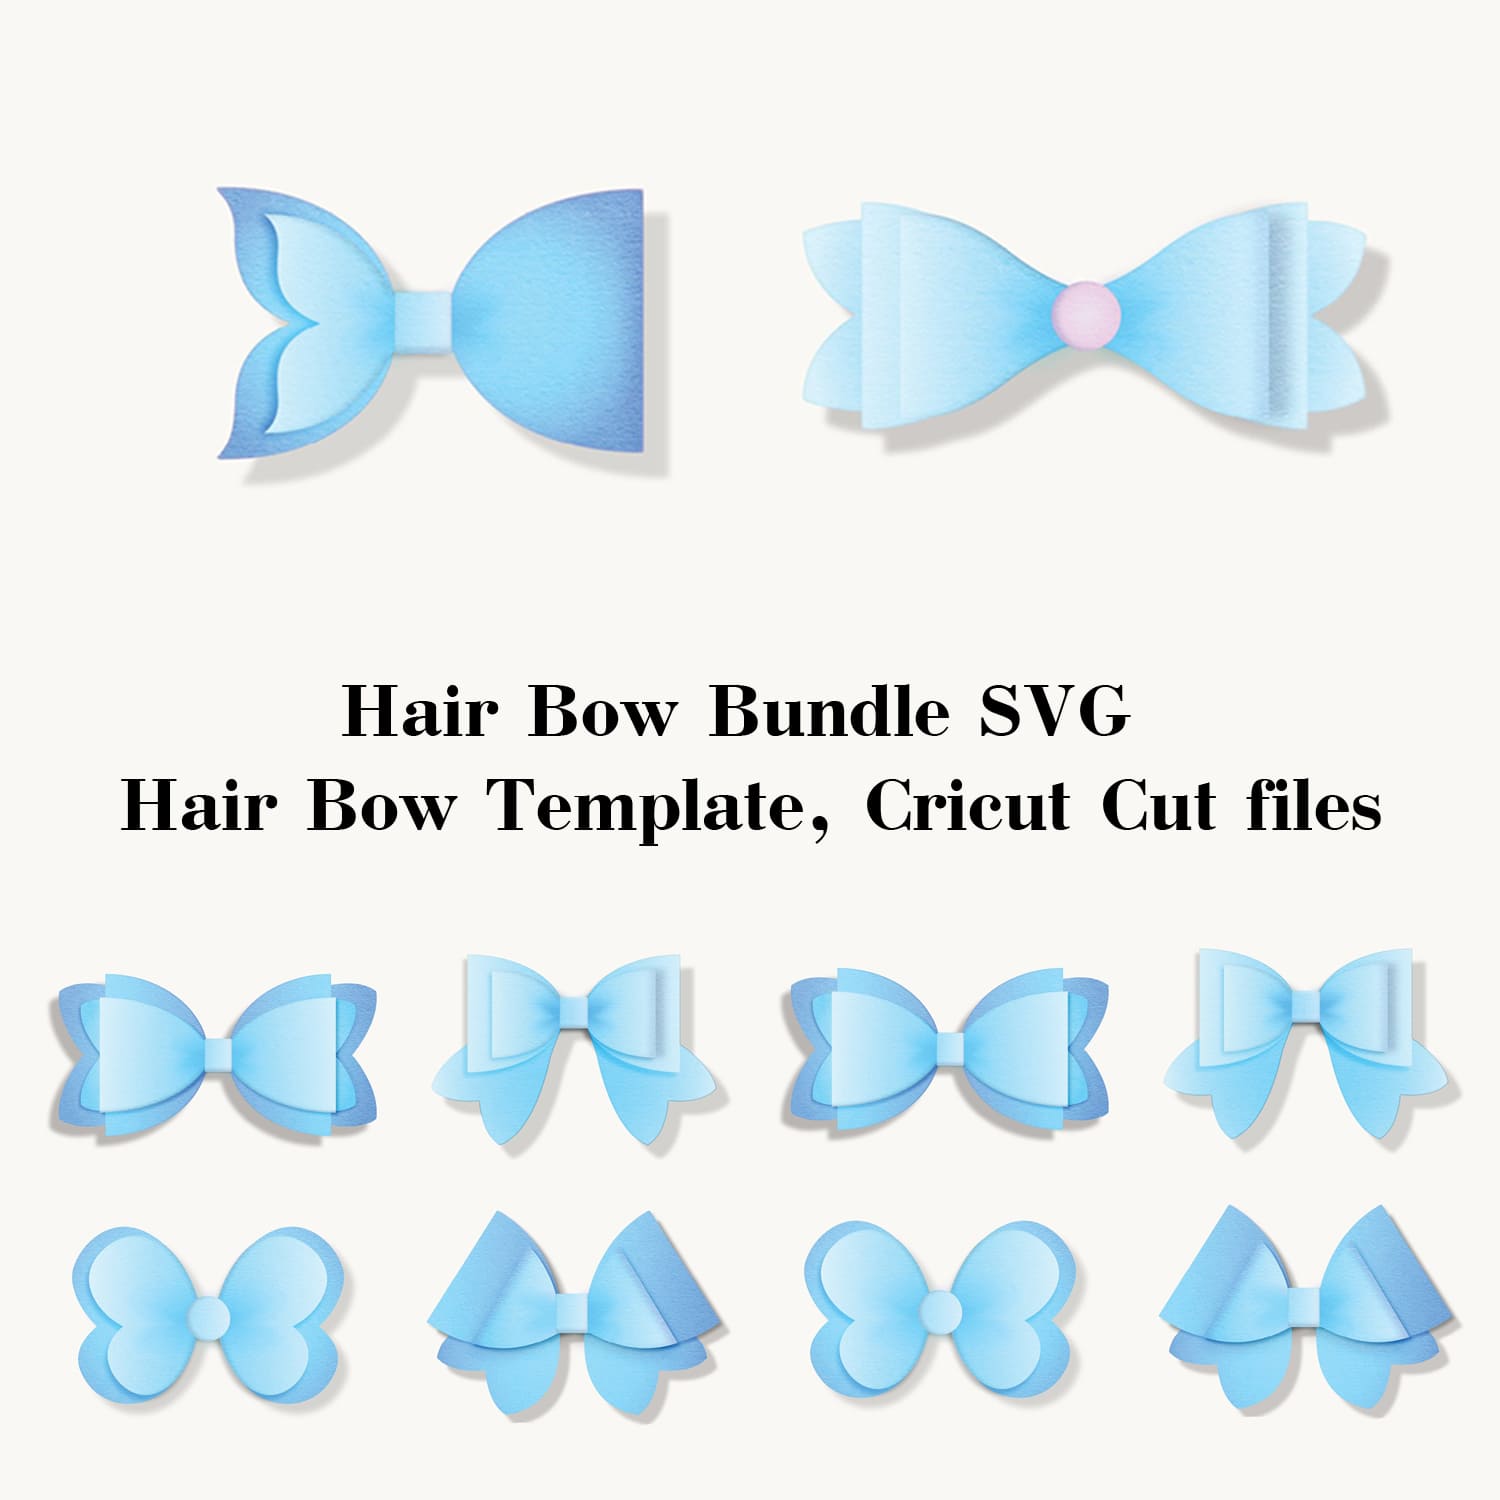 Hair Bow Bundle SVG, Hair Bow Template, Cricut Cut files.